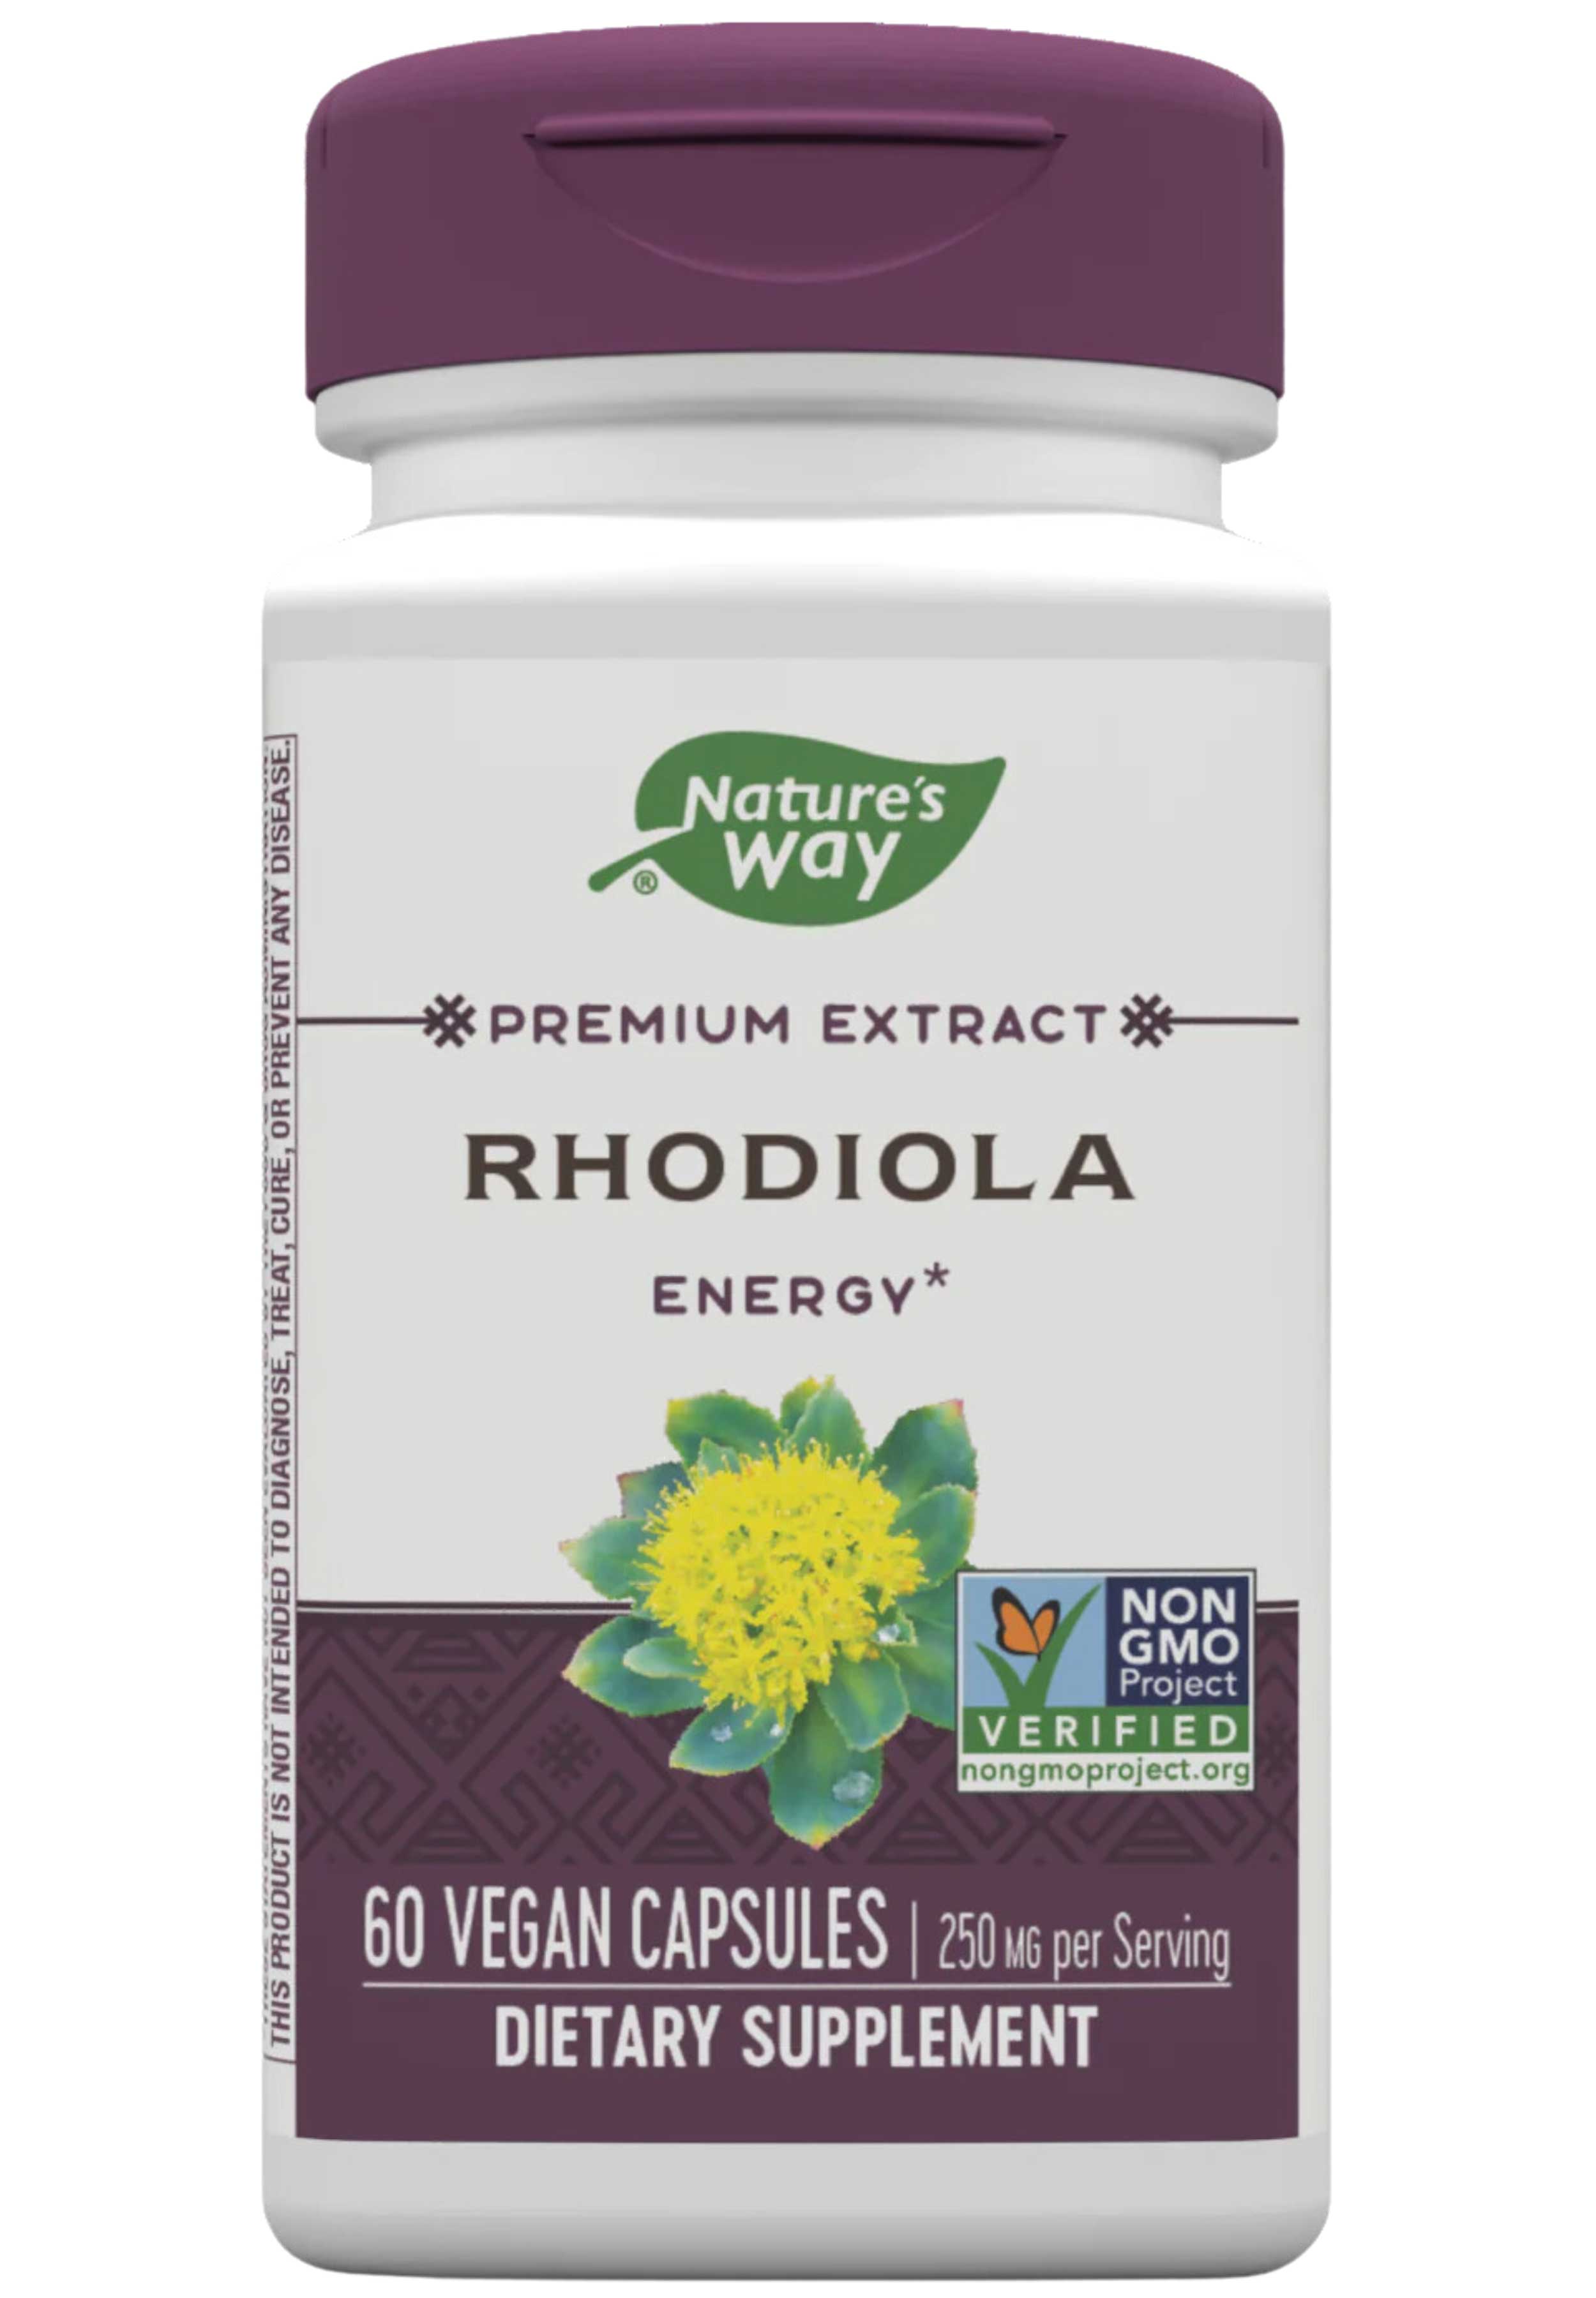 Nature's Way Rhodiola Premium Extract (Rhodiola Rosea)